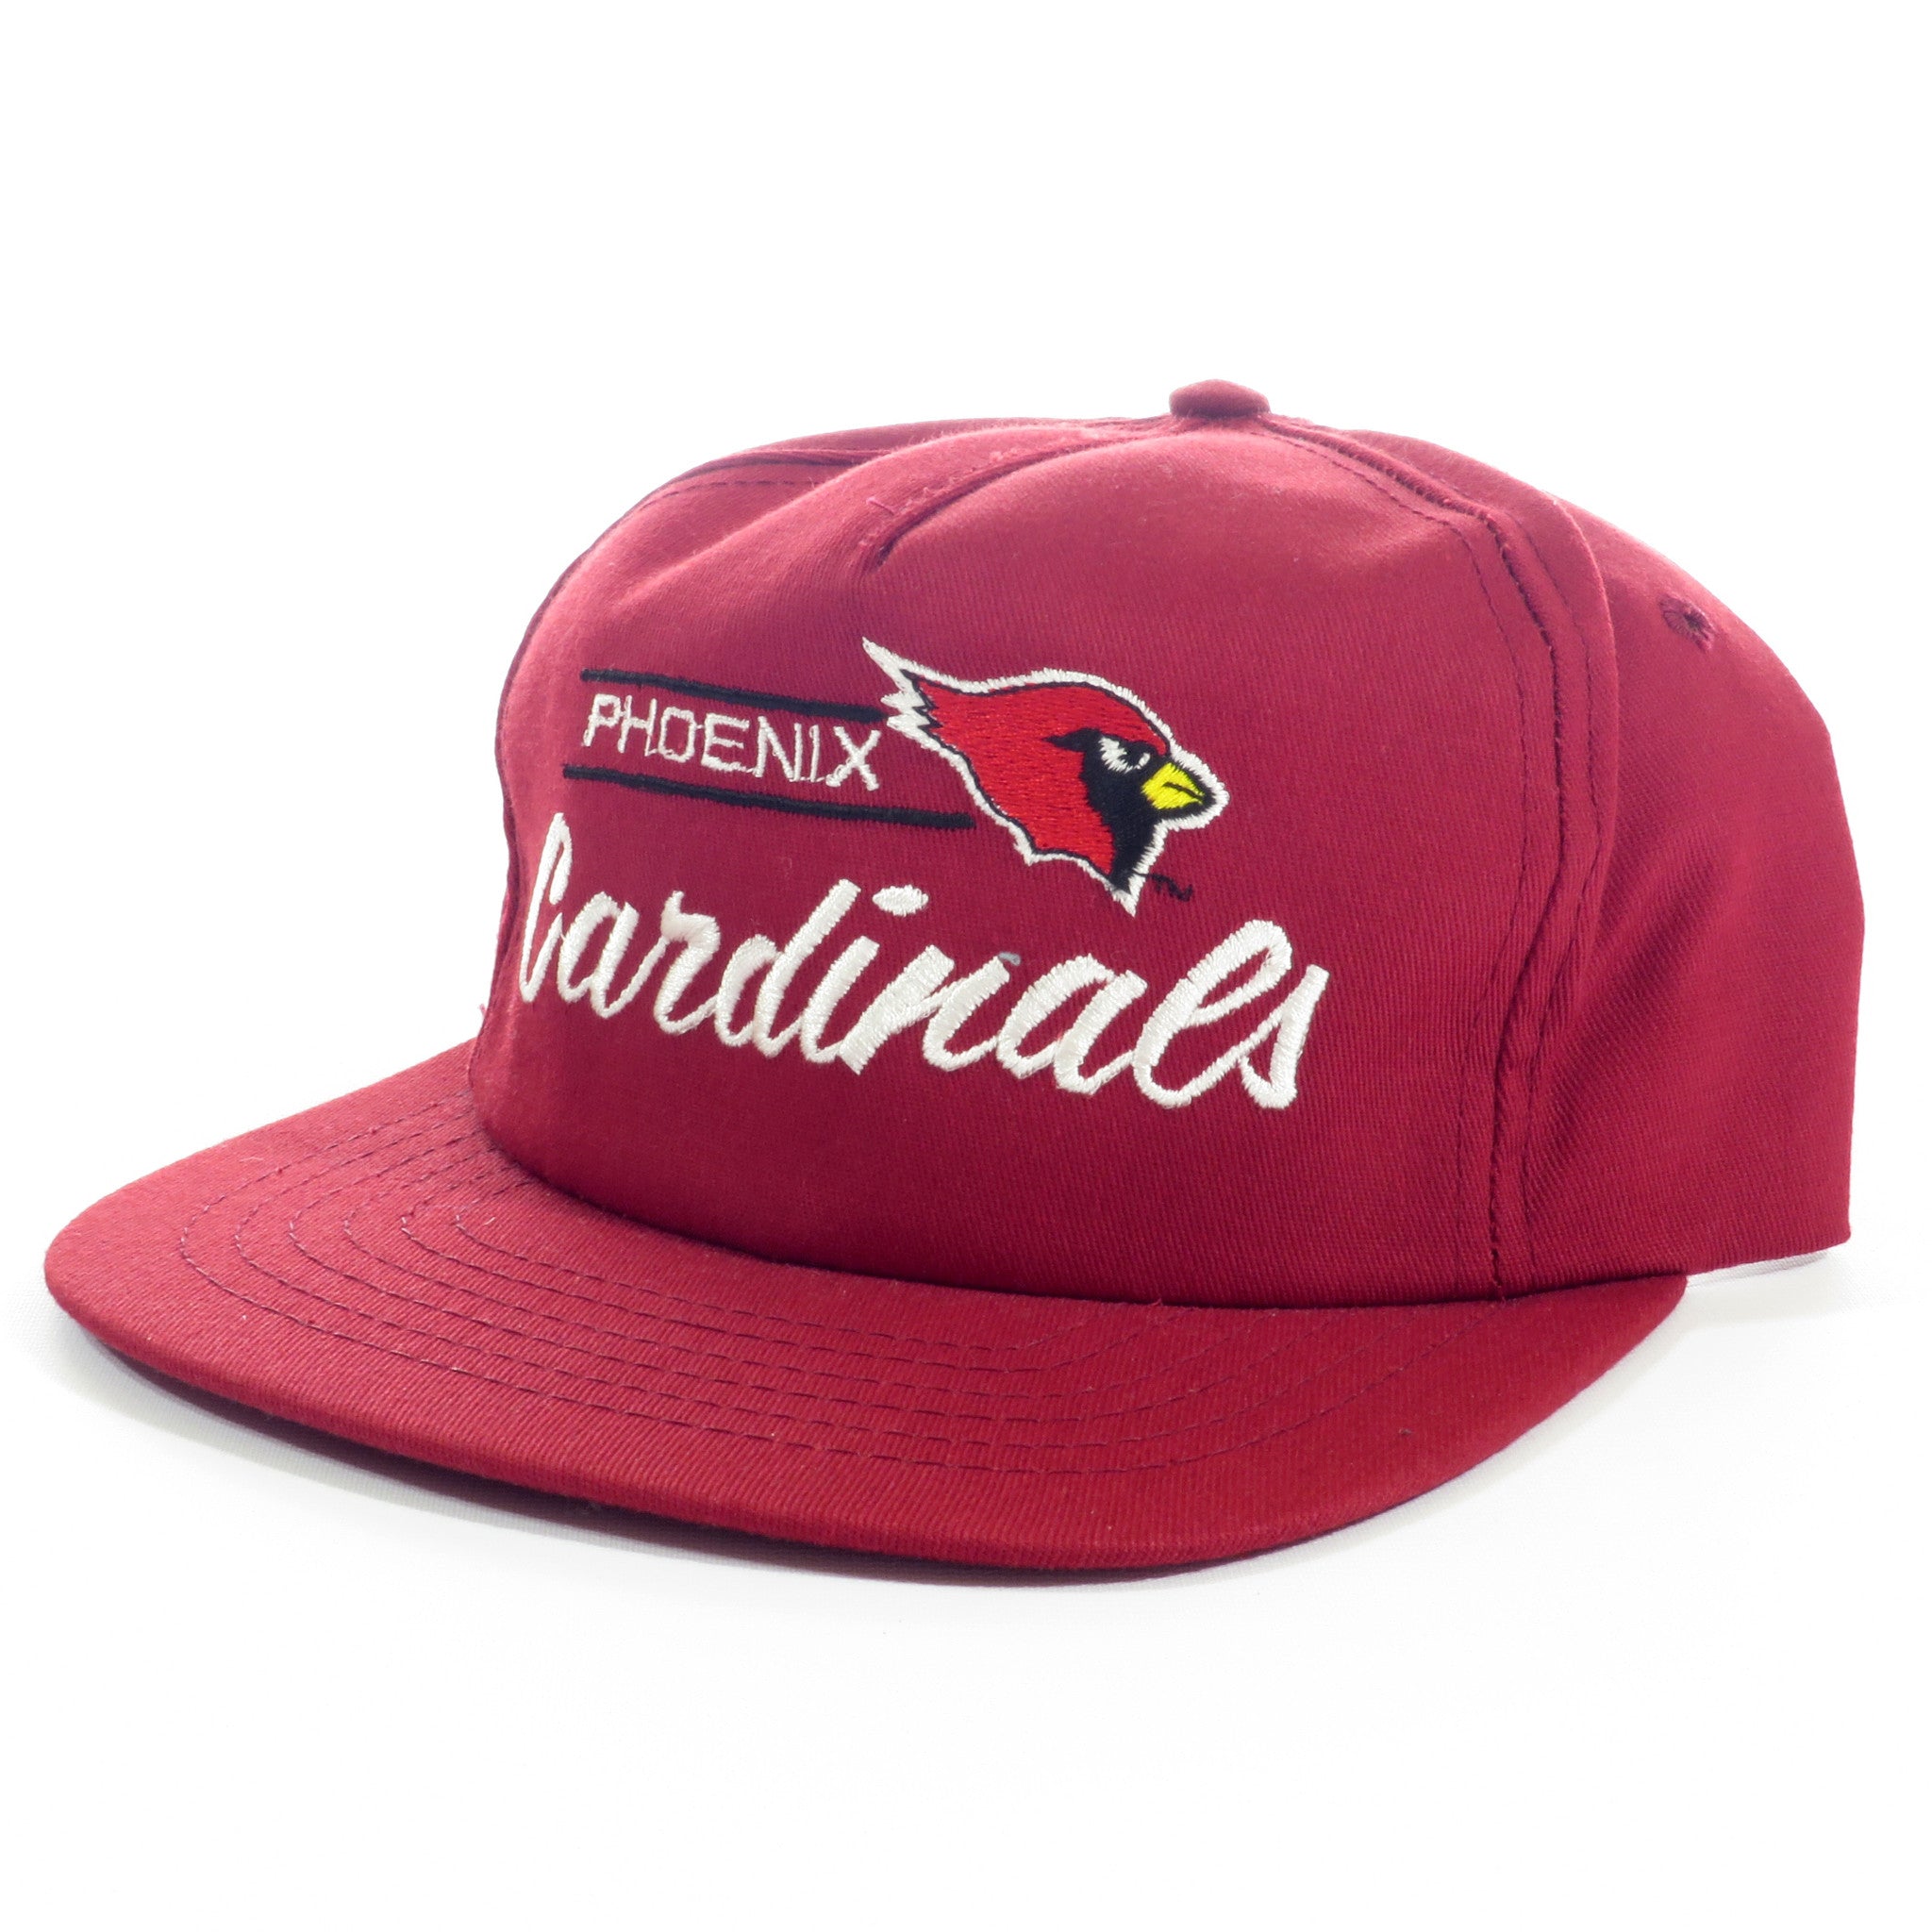 Phoenix Cardinals Snapback Hat